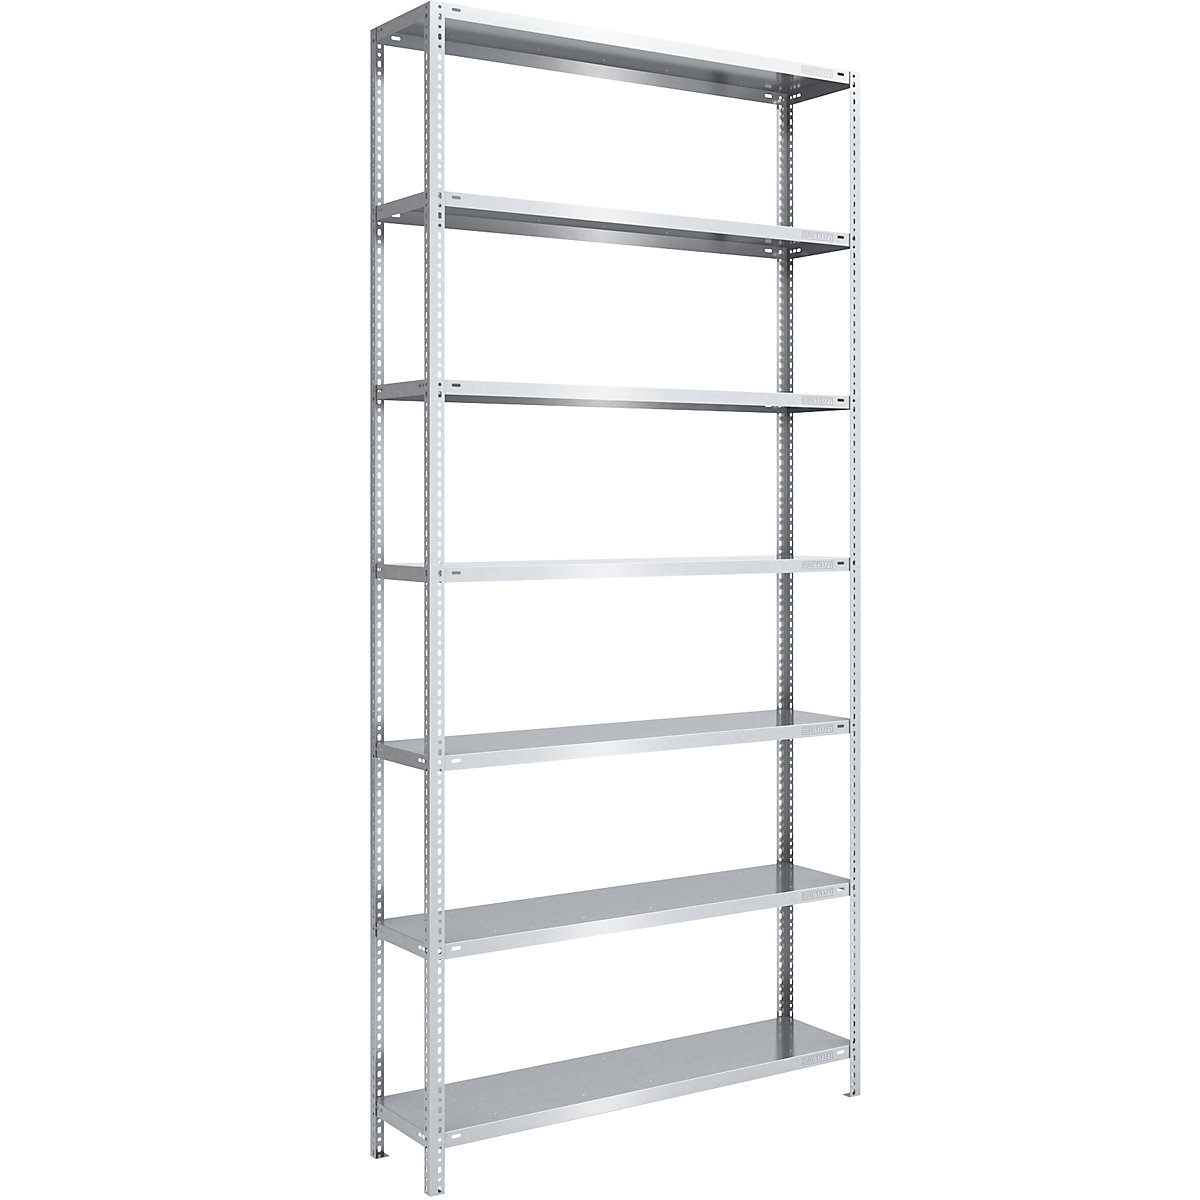 Bolt-together shelf unit, light duty, zinc plated – eurokraft pro, shelf unit height 3000 mm, shelf width 1300 mm, depth 400 mm, standard shelf unit-14